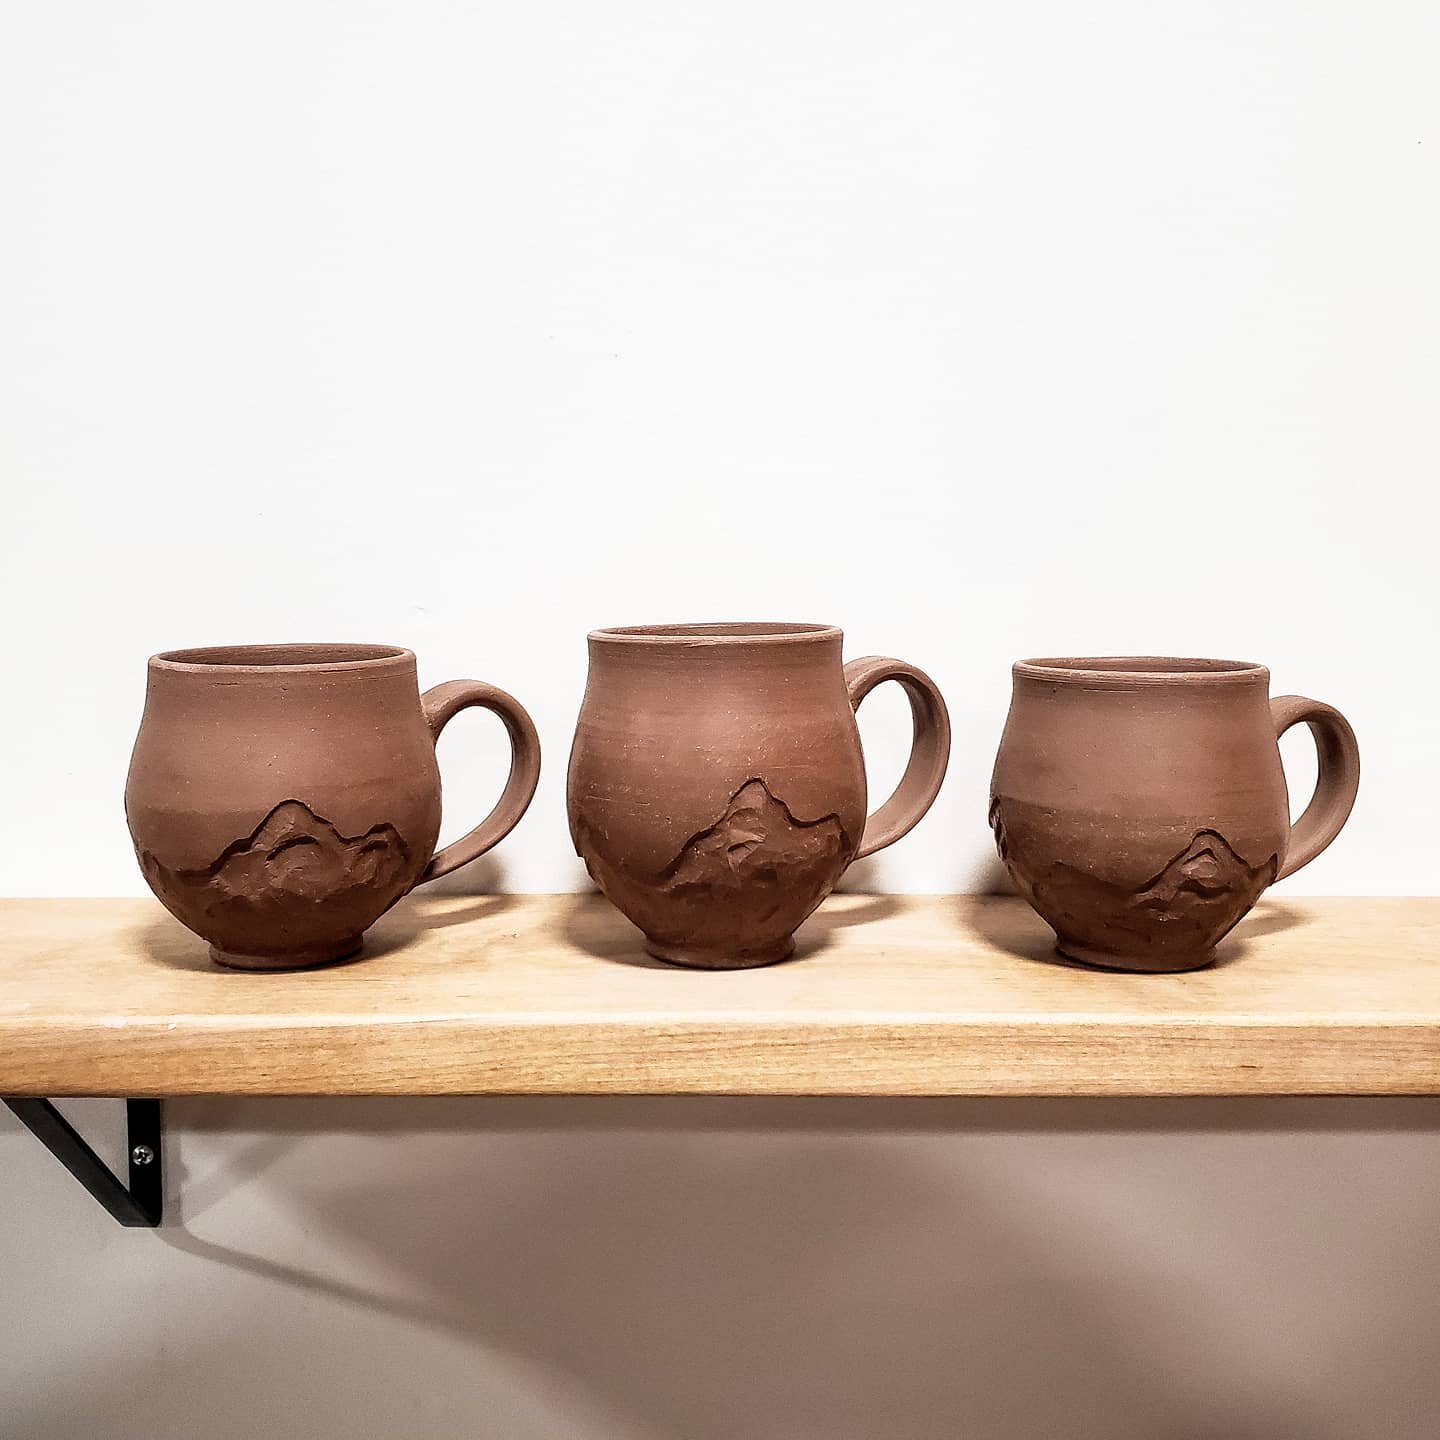 Three mugs is are way better than one
.
.
.
.
.
#clay #ceramics #mugs #coffeegram #ceramic #cone6 #coffeemug #mug #coffeecup #coffeemugoftheday #makersgonnamake #claycraft #crafts #coffee #coffeeaddict #handmadewithlove #coffeemugaddict #handmadecera